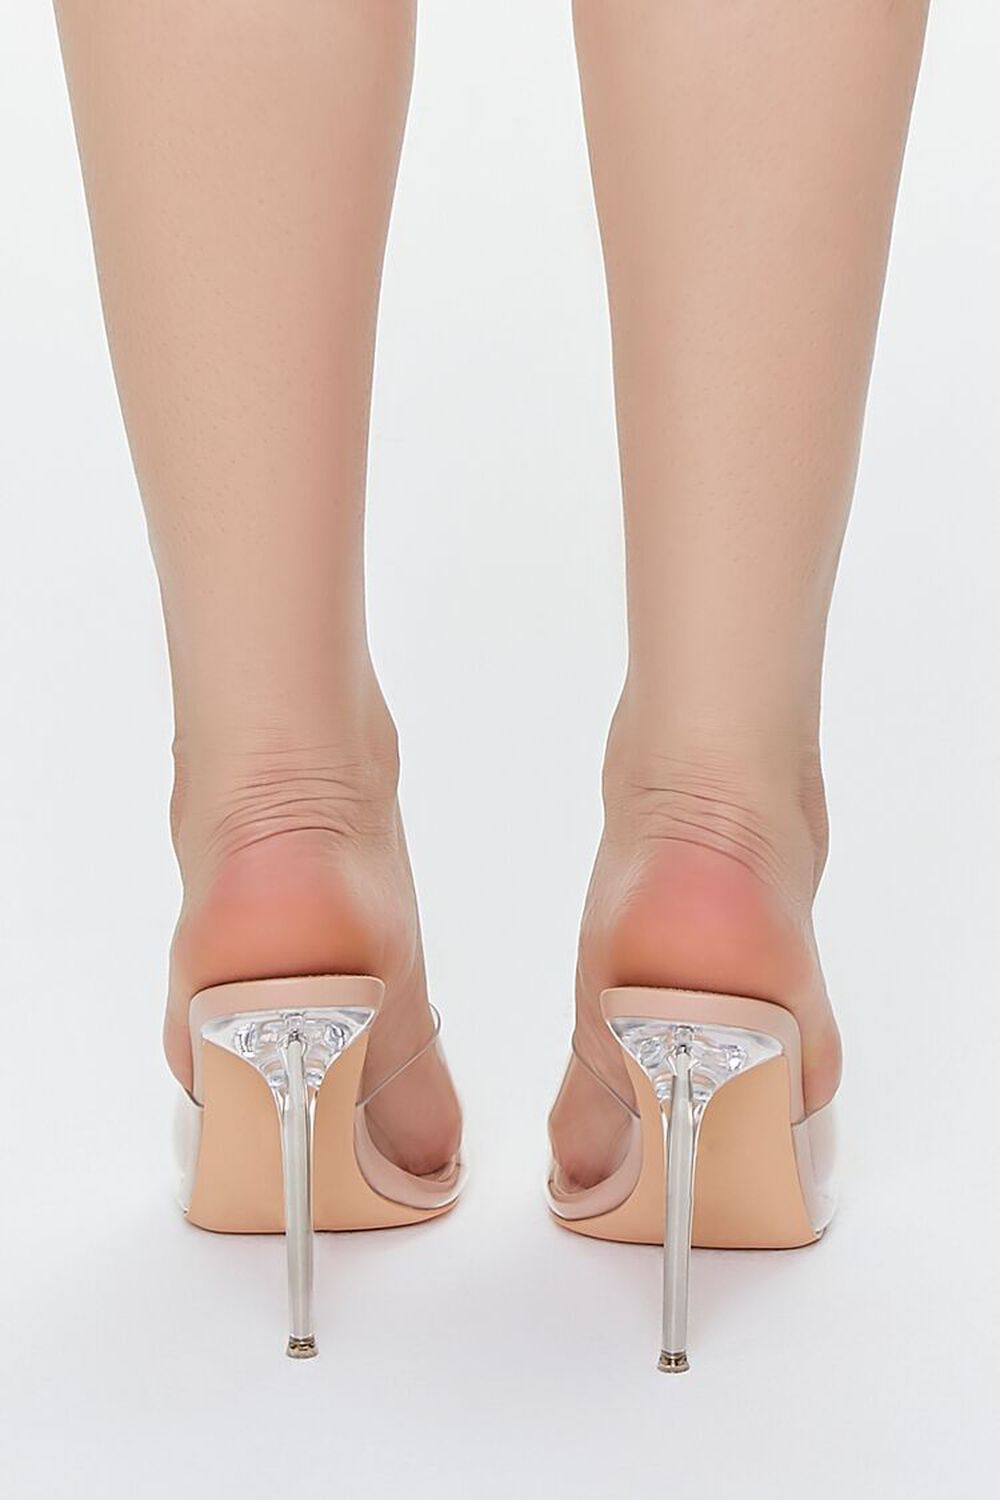 NUDE Open-Toe Lucite Stiletto Heels, image 3